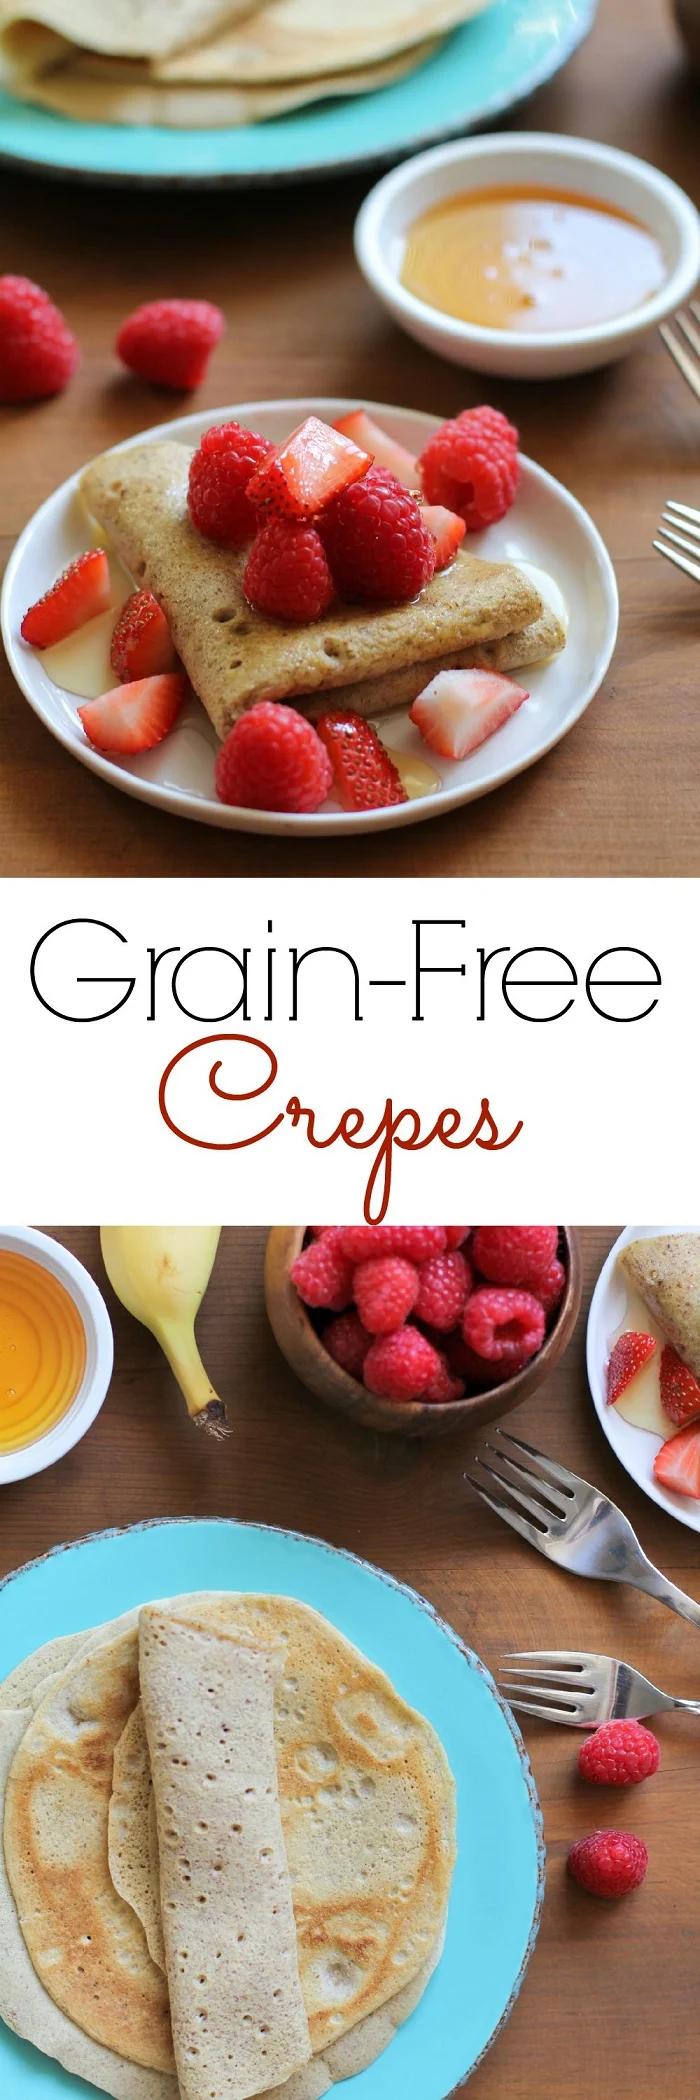 4-Ingredient Grain-Free Crepes made easily in a blender | TheRoastedRoot.net #glutenfree #paleo #breakfast #healthy